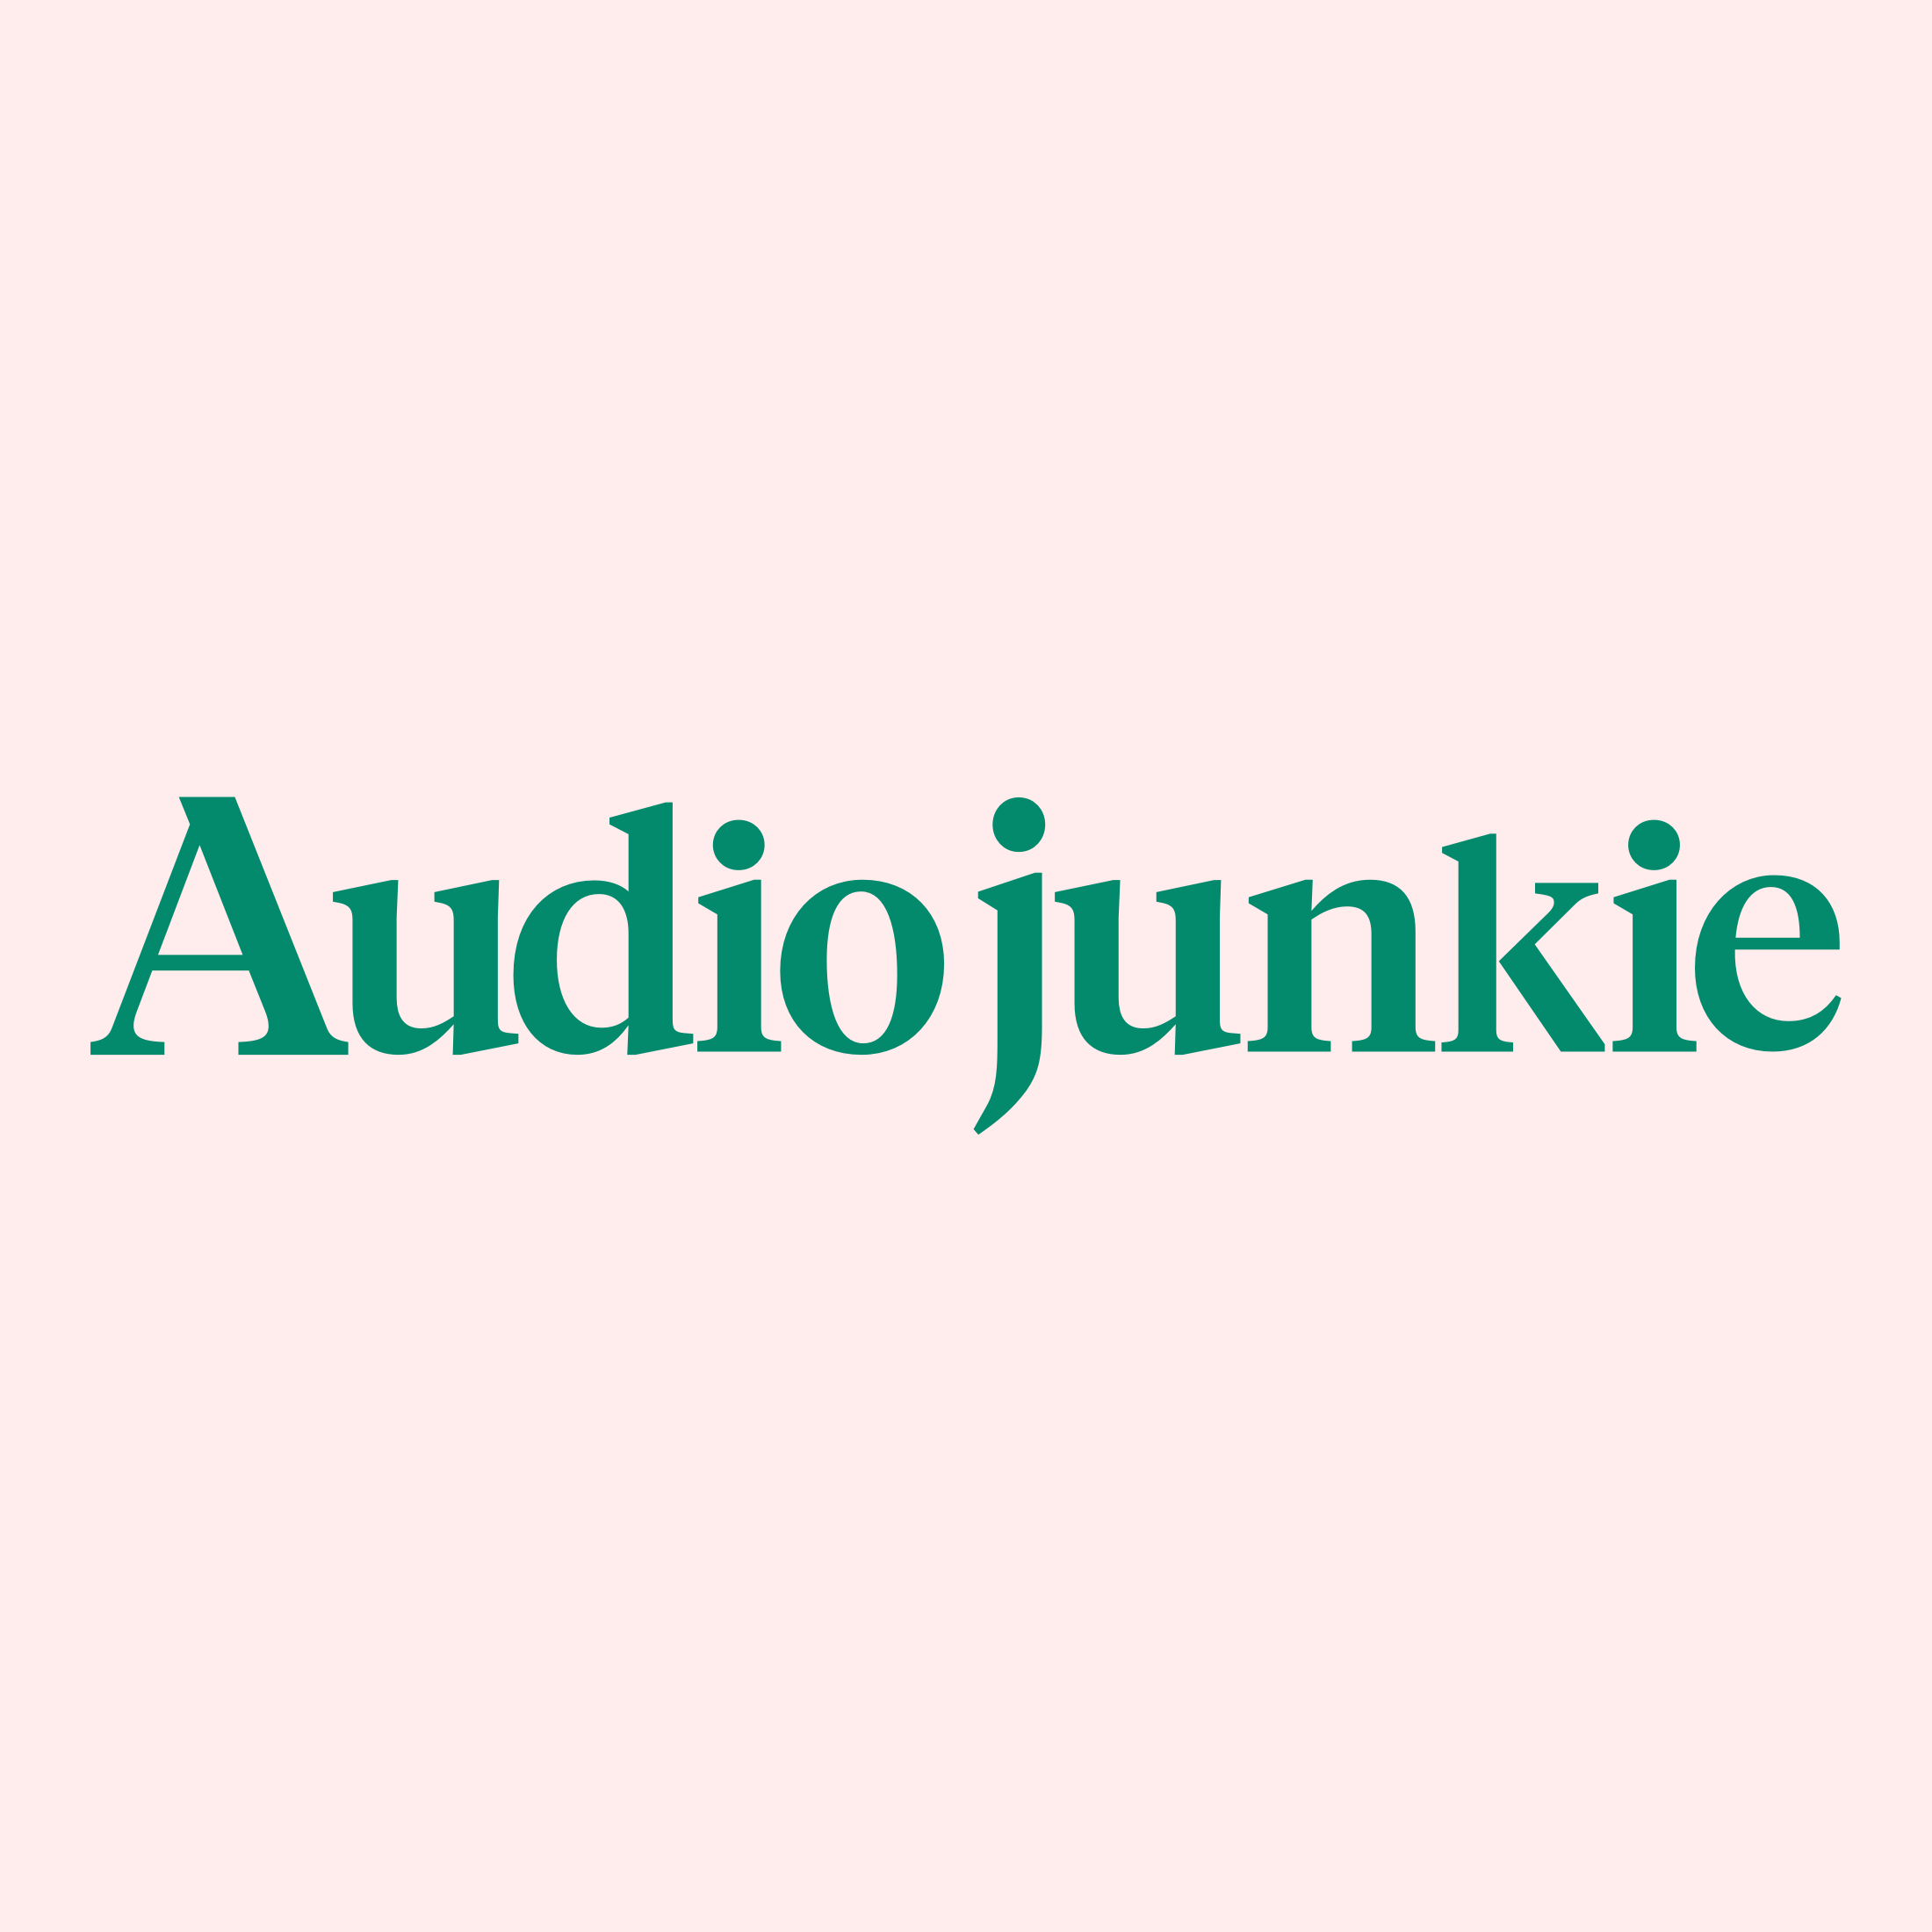 Audio junkie